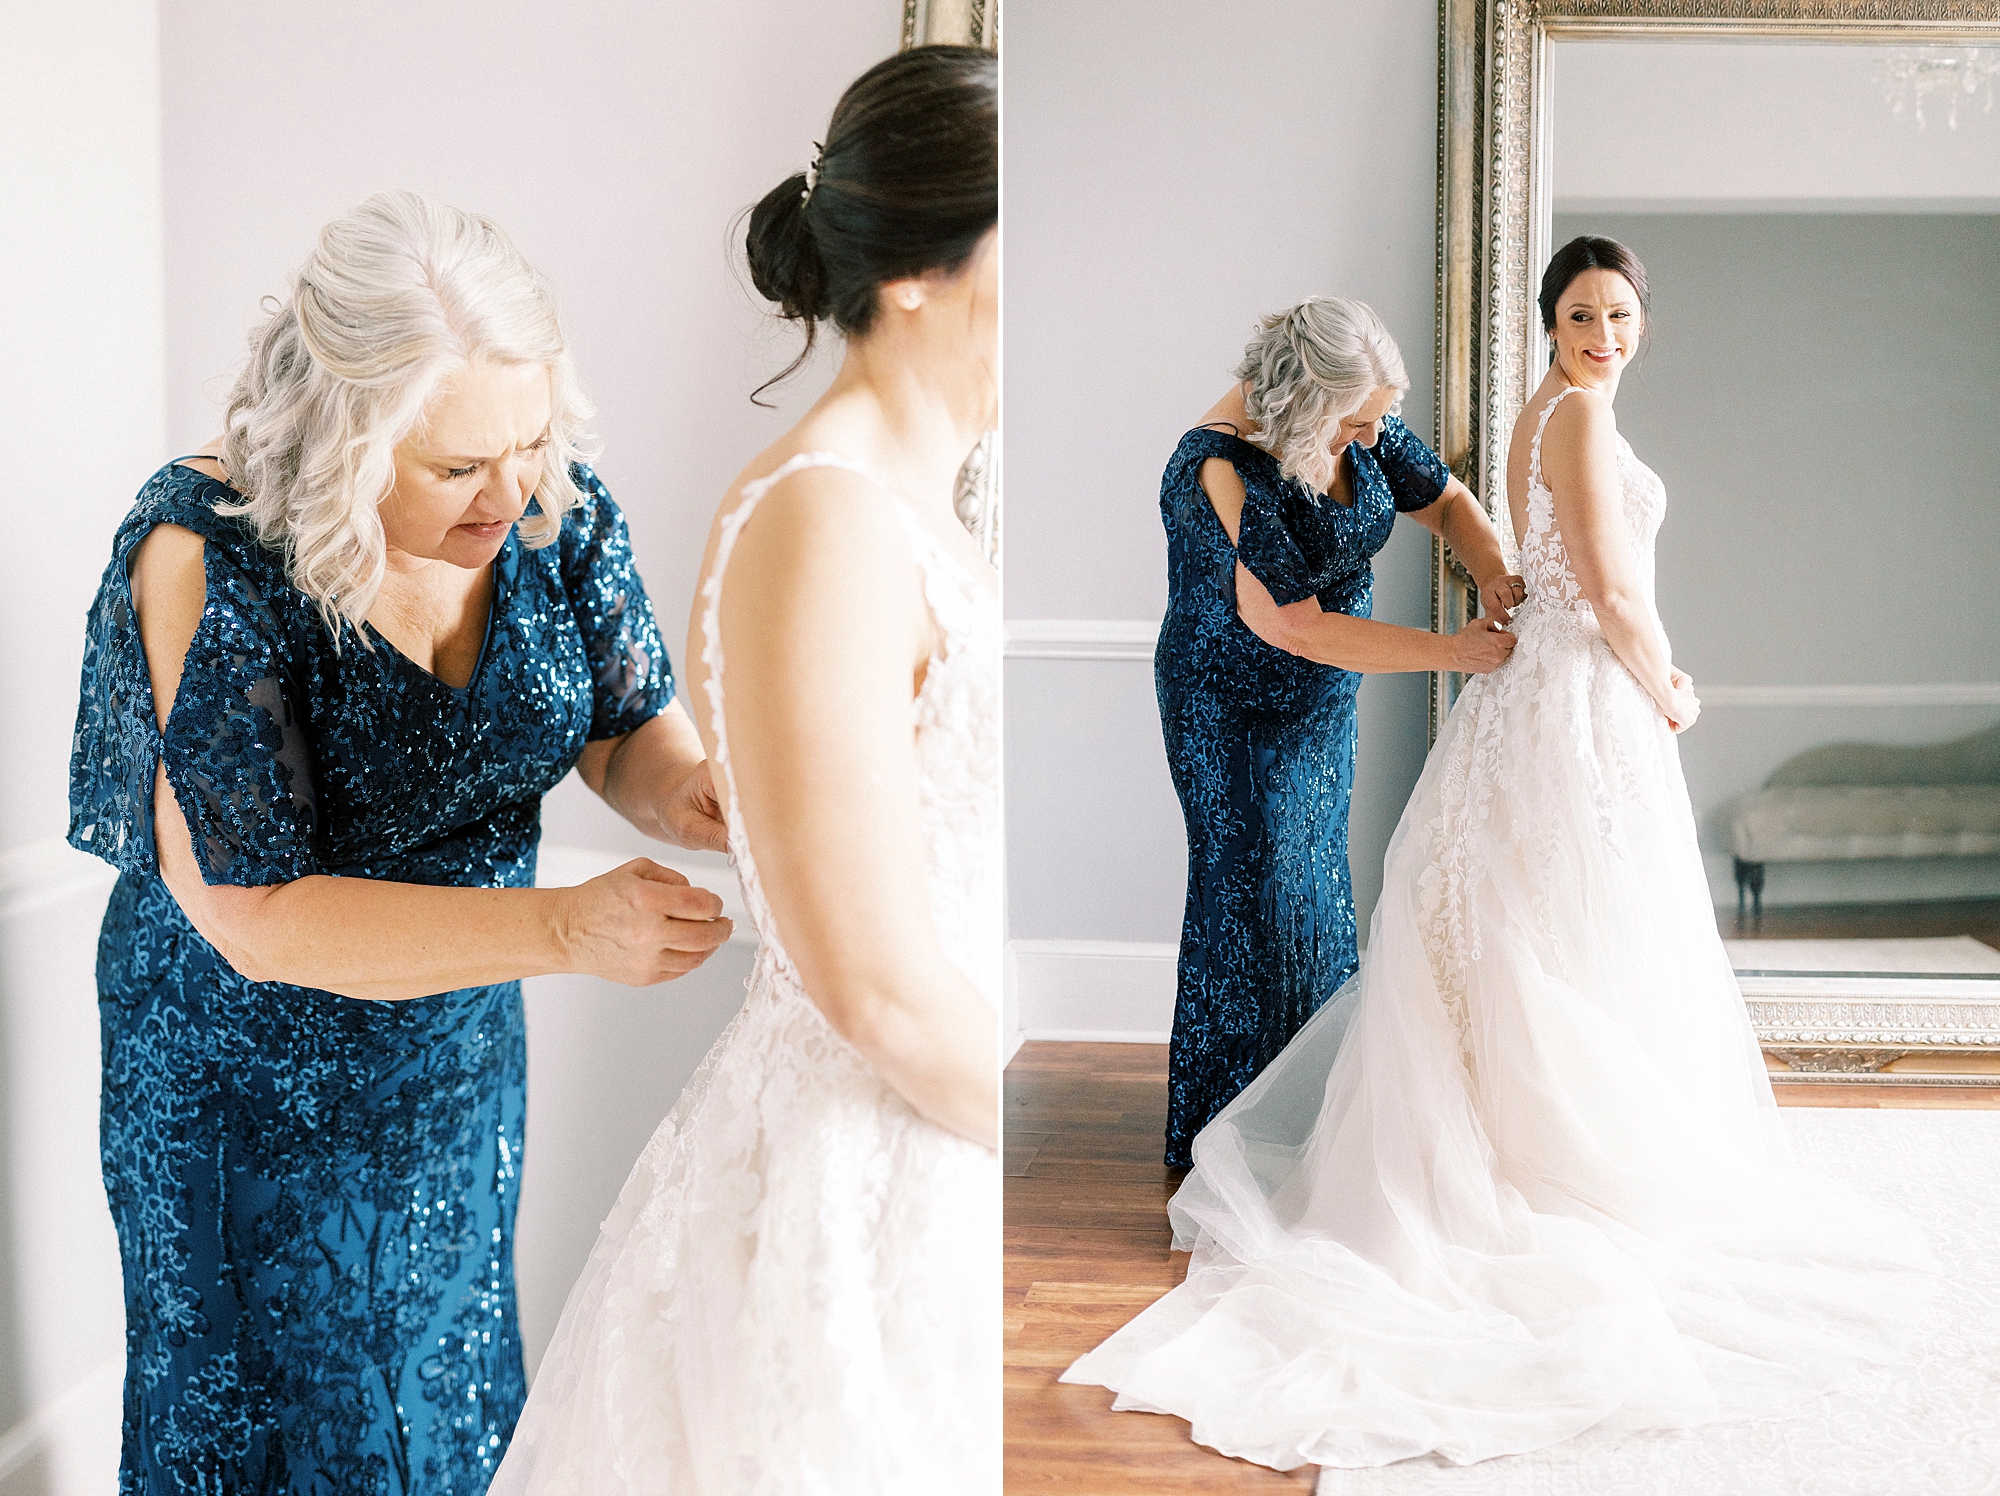 mother helps bride into wedding dress in Seaprk Mansion bridal suite 